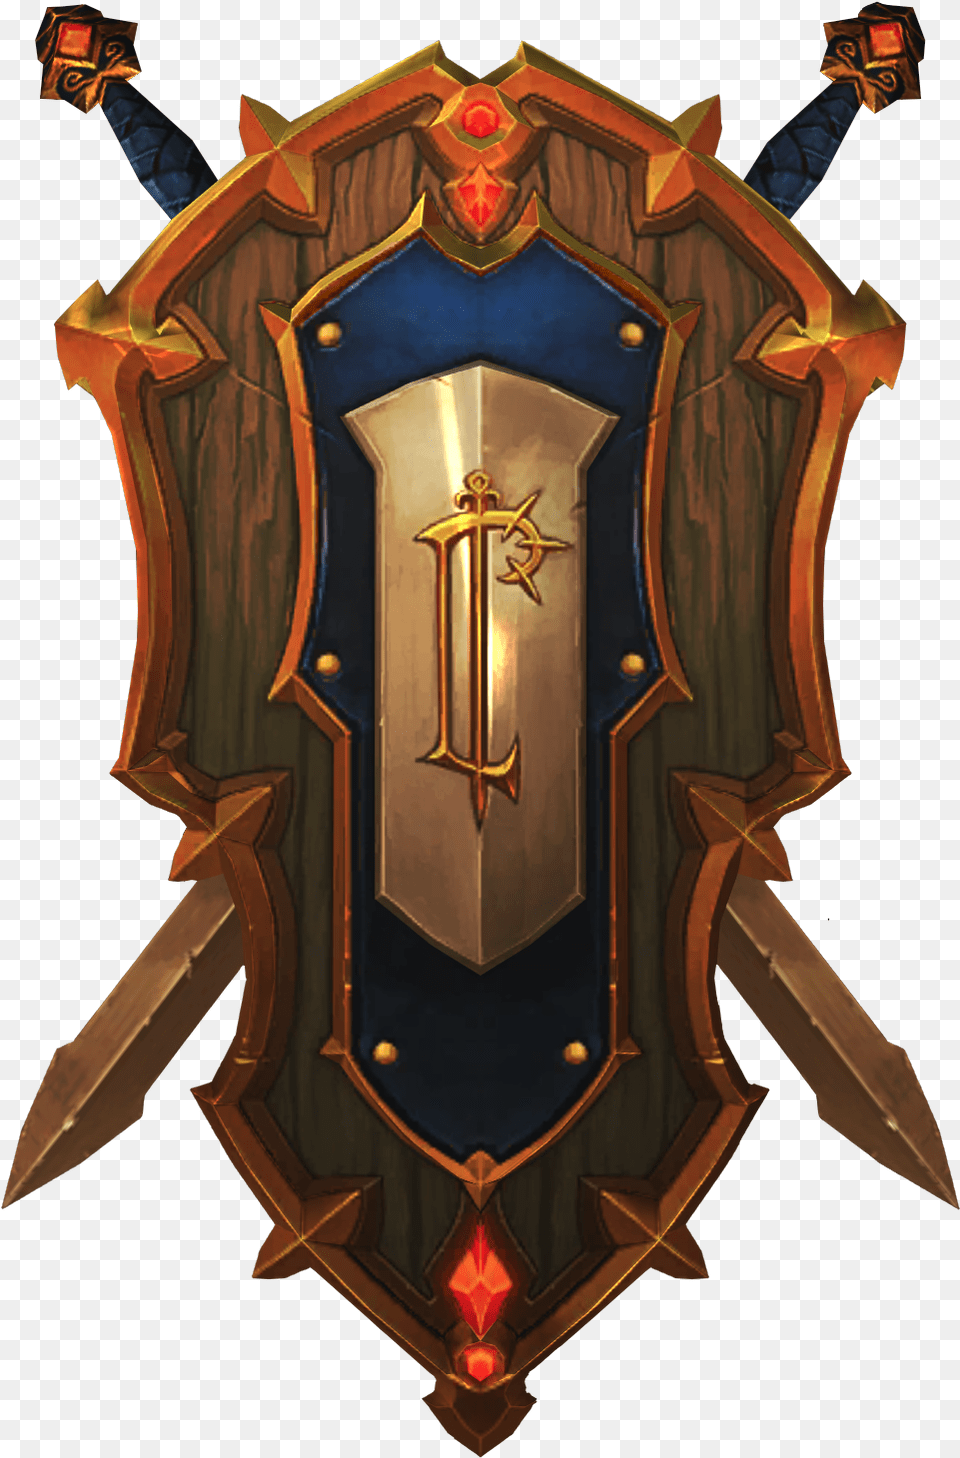 World Of Warcraft Wiki Crest Of Lordaeron, Armor, Shield, Blade, Dagger Png Image